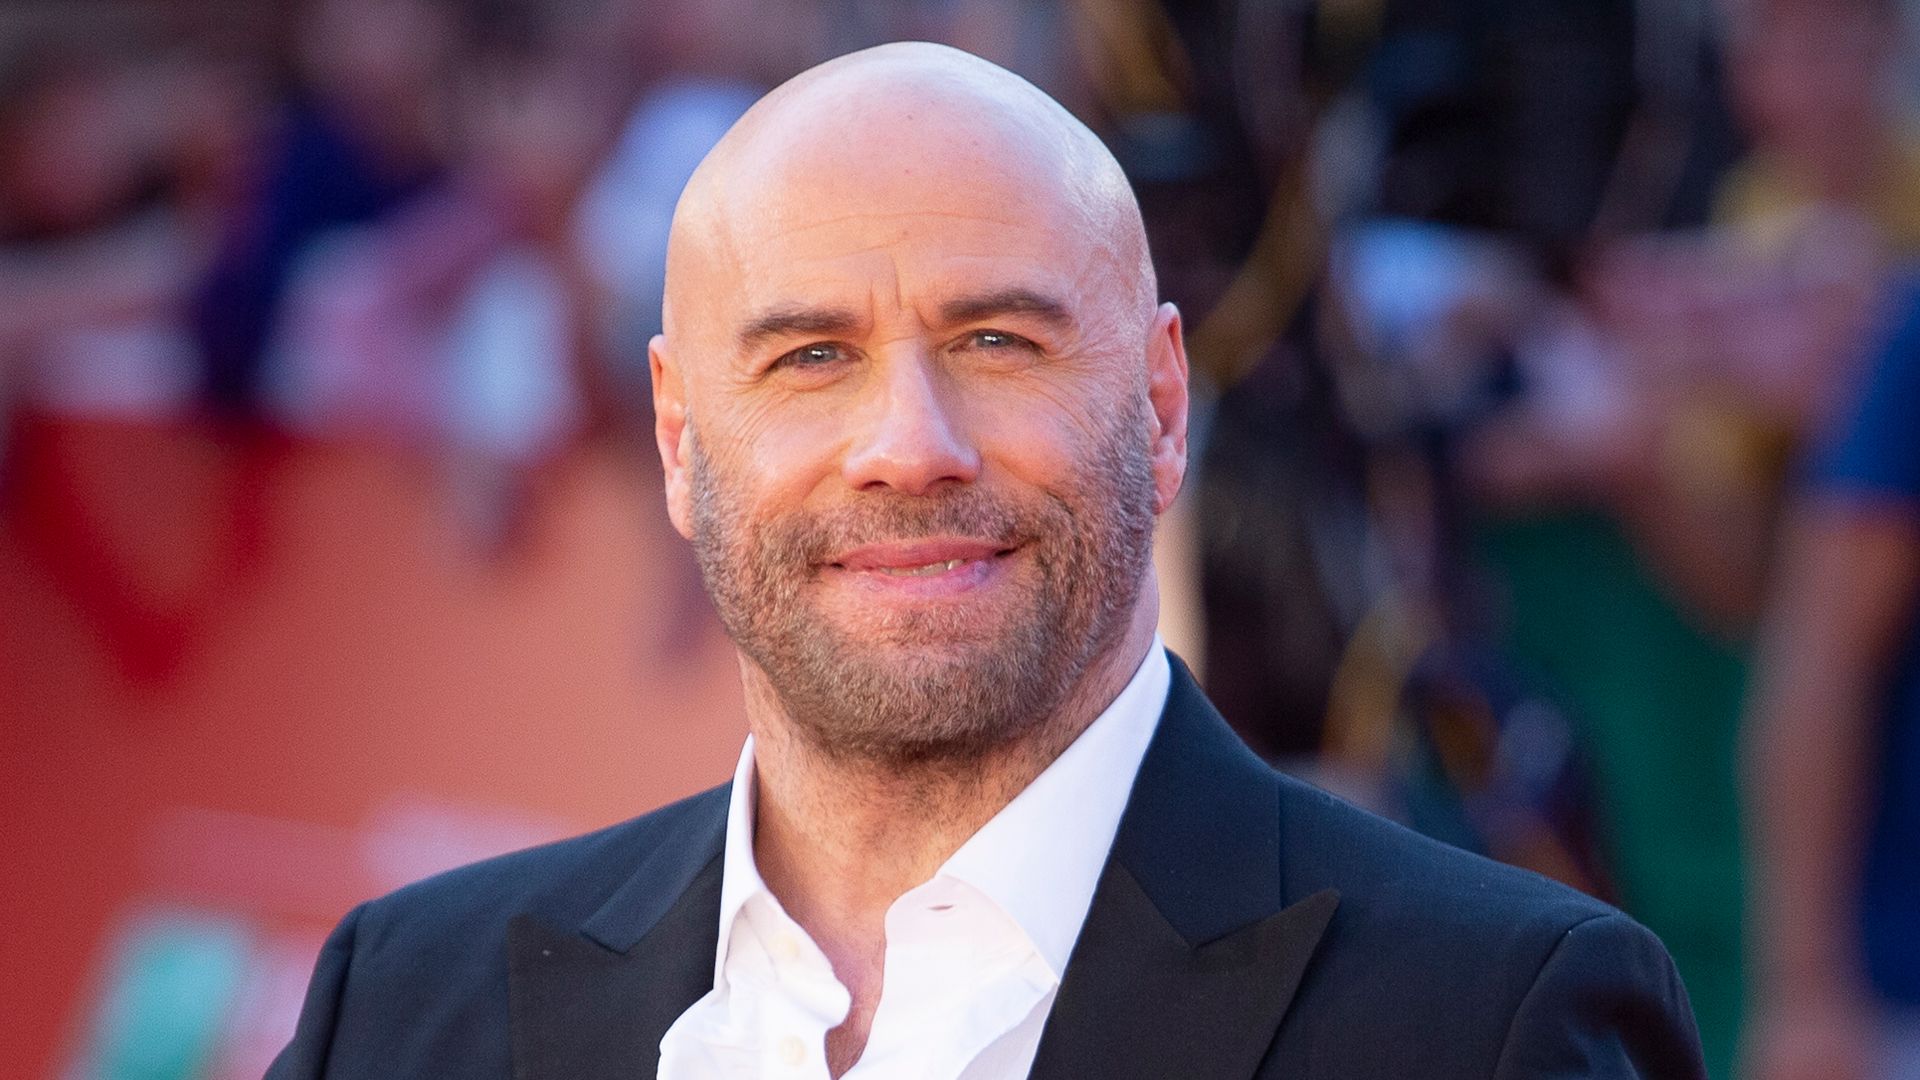 John Travolta posing on the red carpet at the Rome Film Festival in 2022